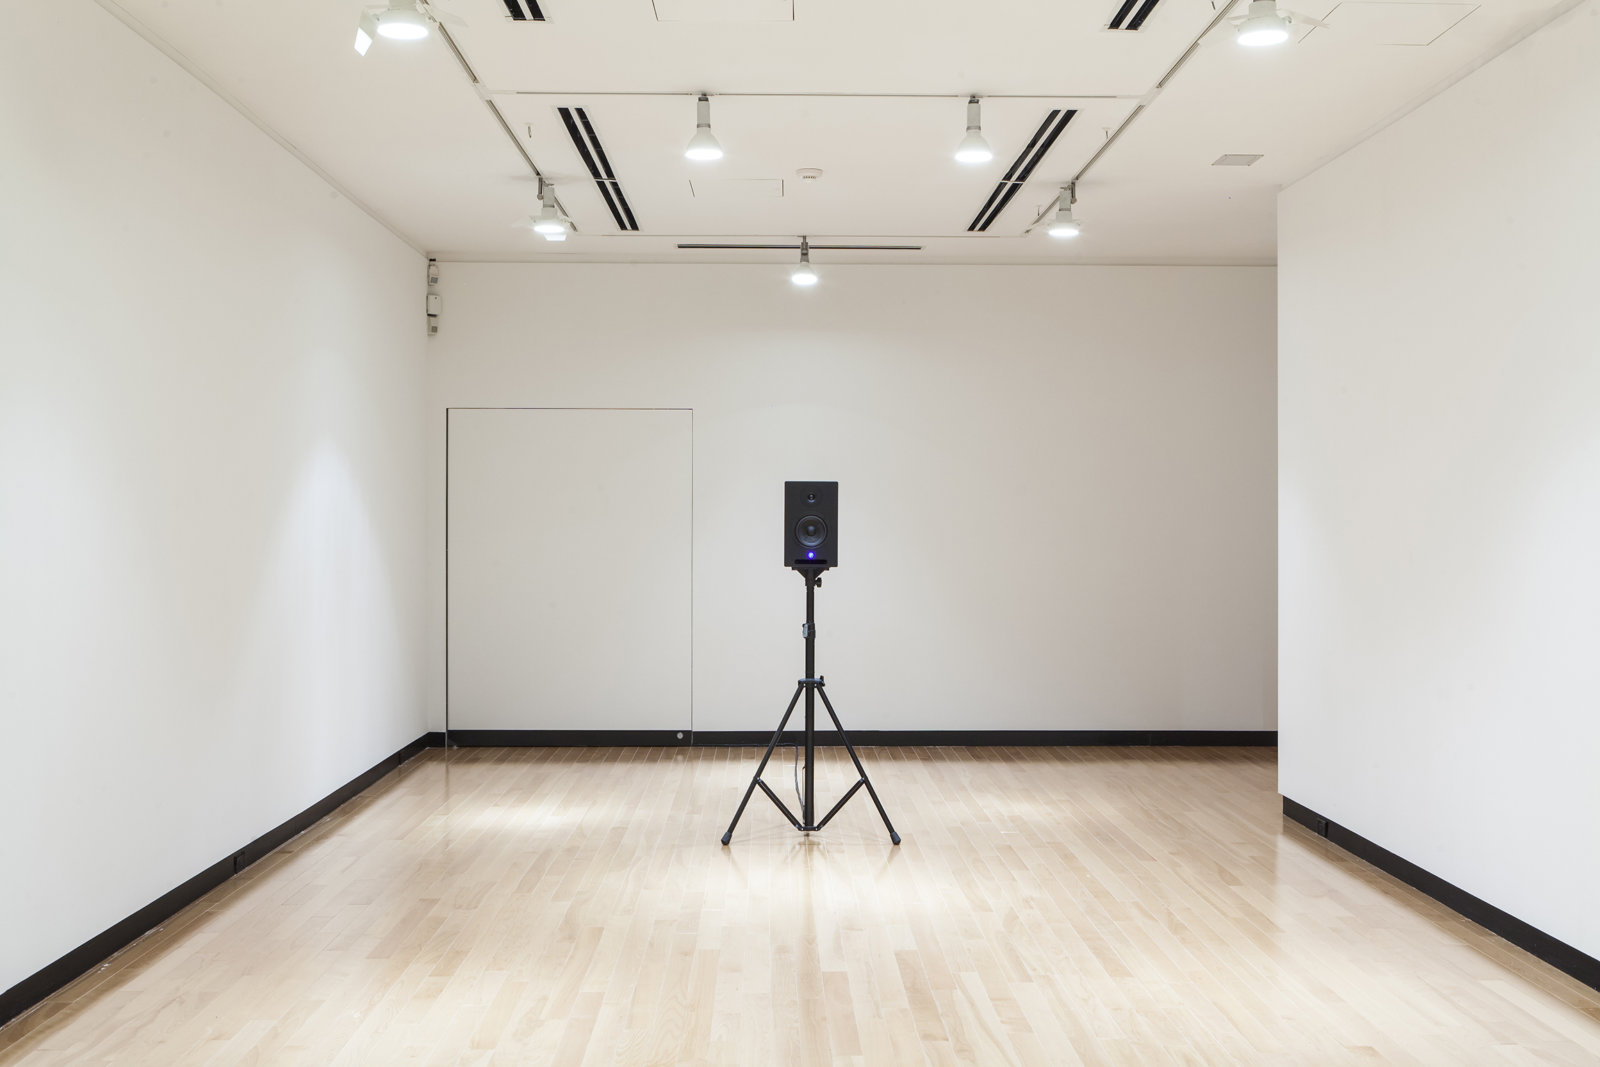 Janice Kerbel, Ballgame (Pregame), 2009, audio recording, loudspeaker, stand, dimensions variable. Installation view, Pre, Justina M. Barnicke Gallery, Toronto, ON, 2012